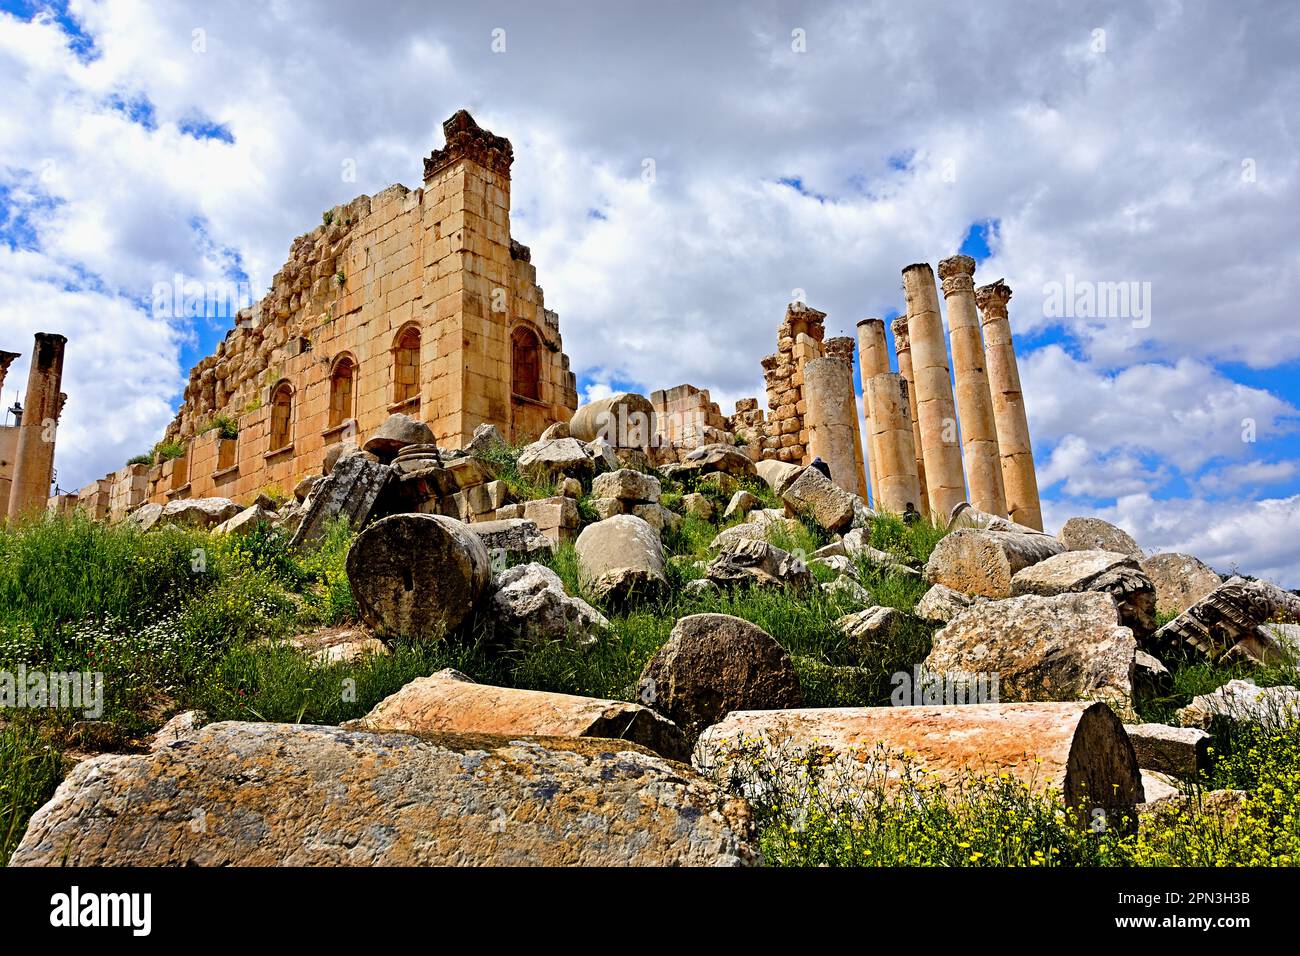 Tempio di Zeus, rovine romane, Jerash, Giordania, città antica, vanta una catena ininterrotta di occupazione umana risalente a 6.500 anni fa, Foto Stock